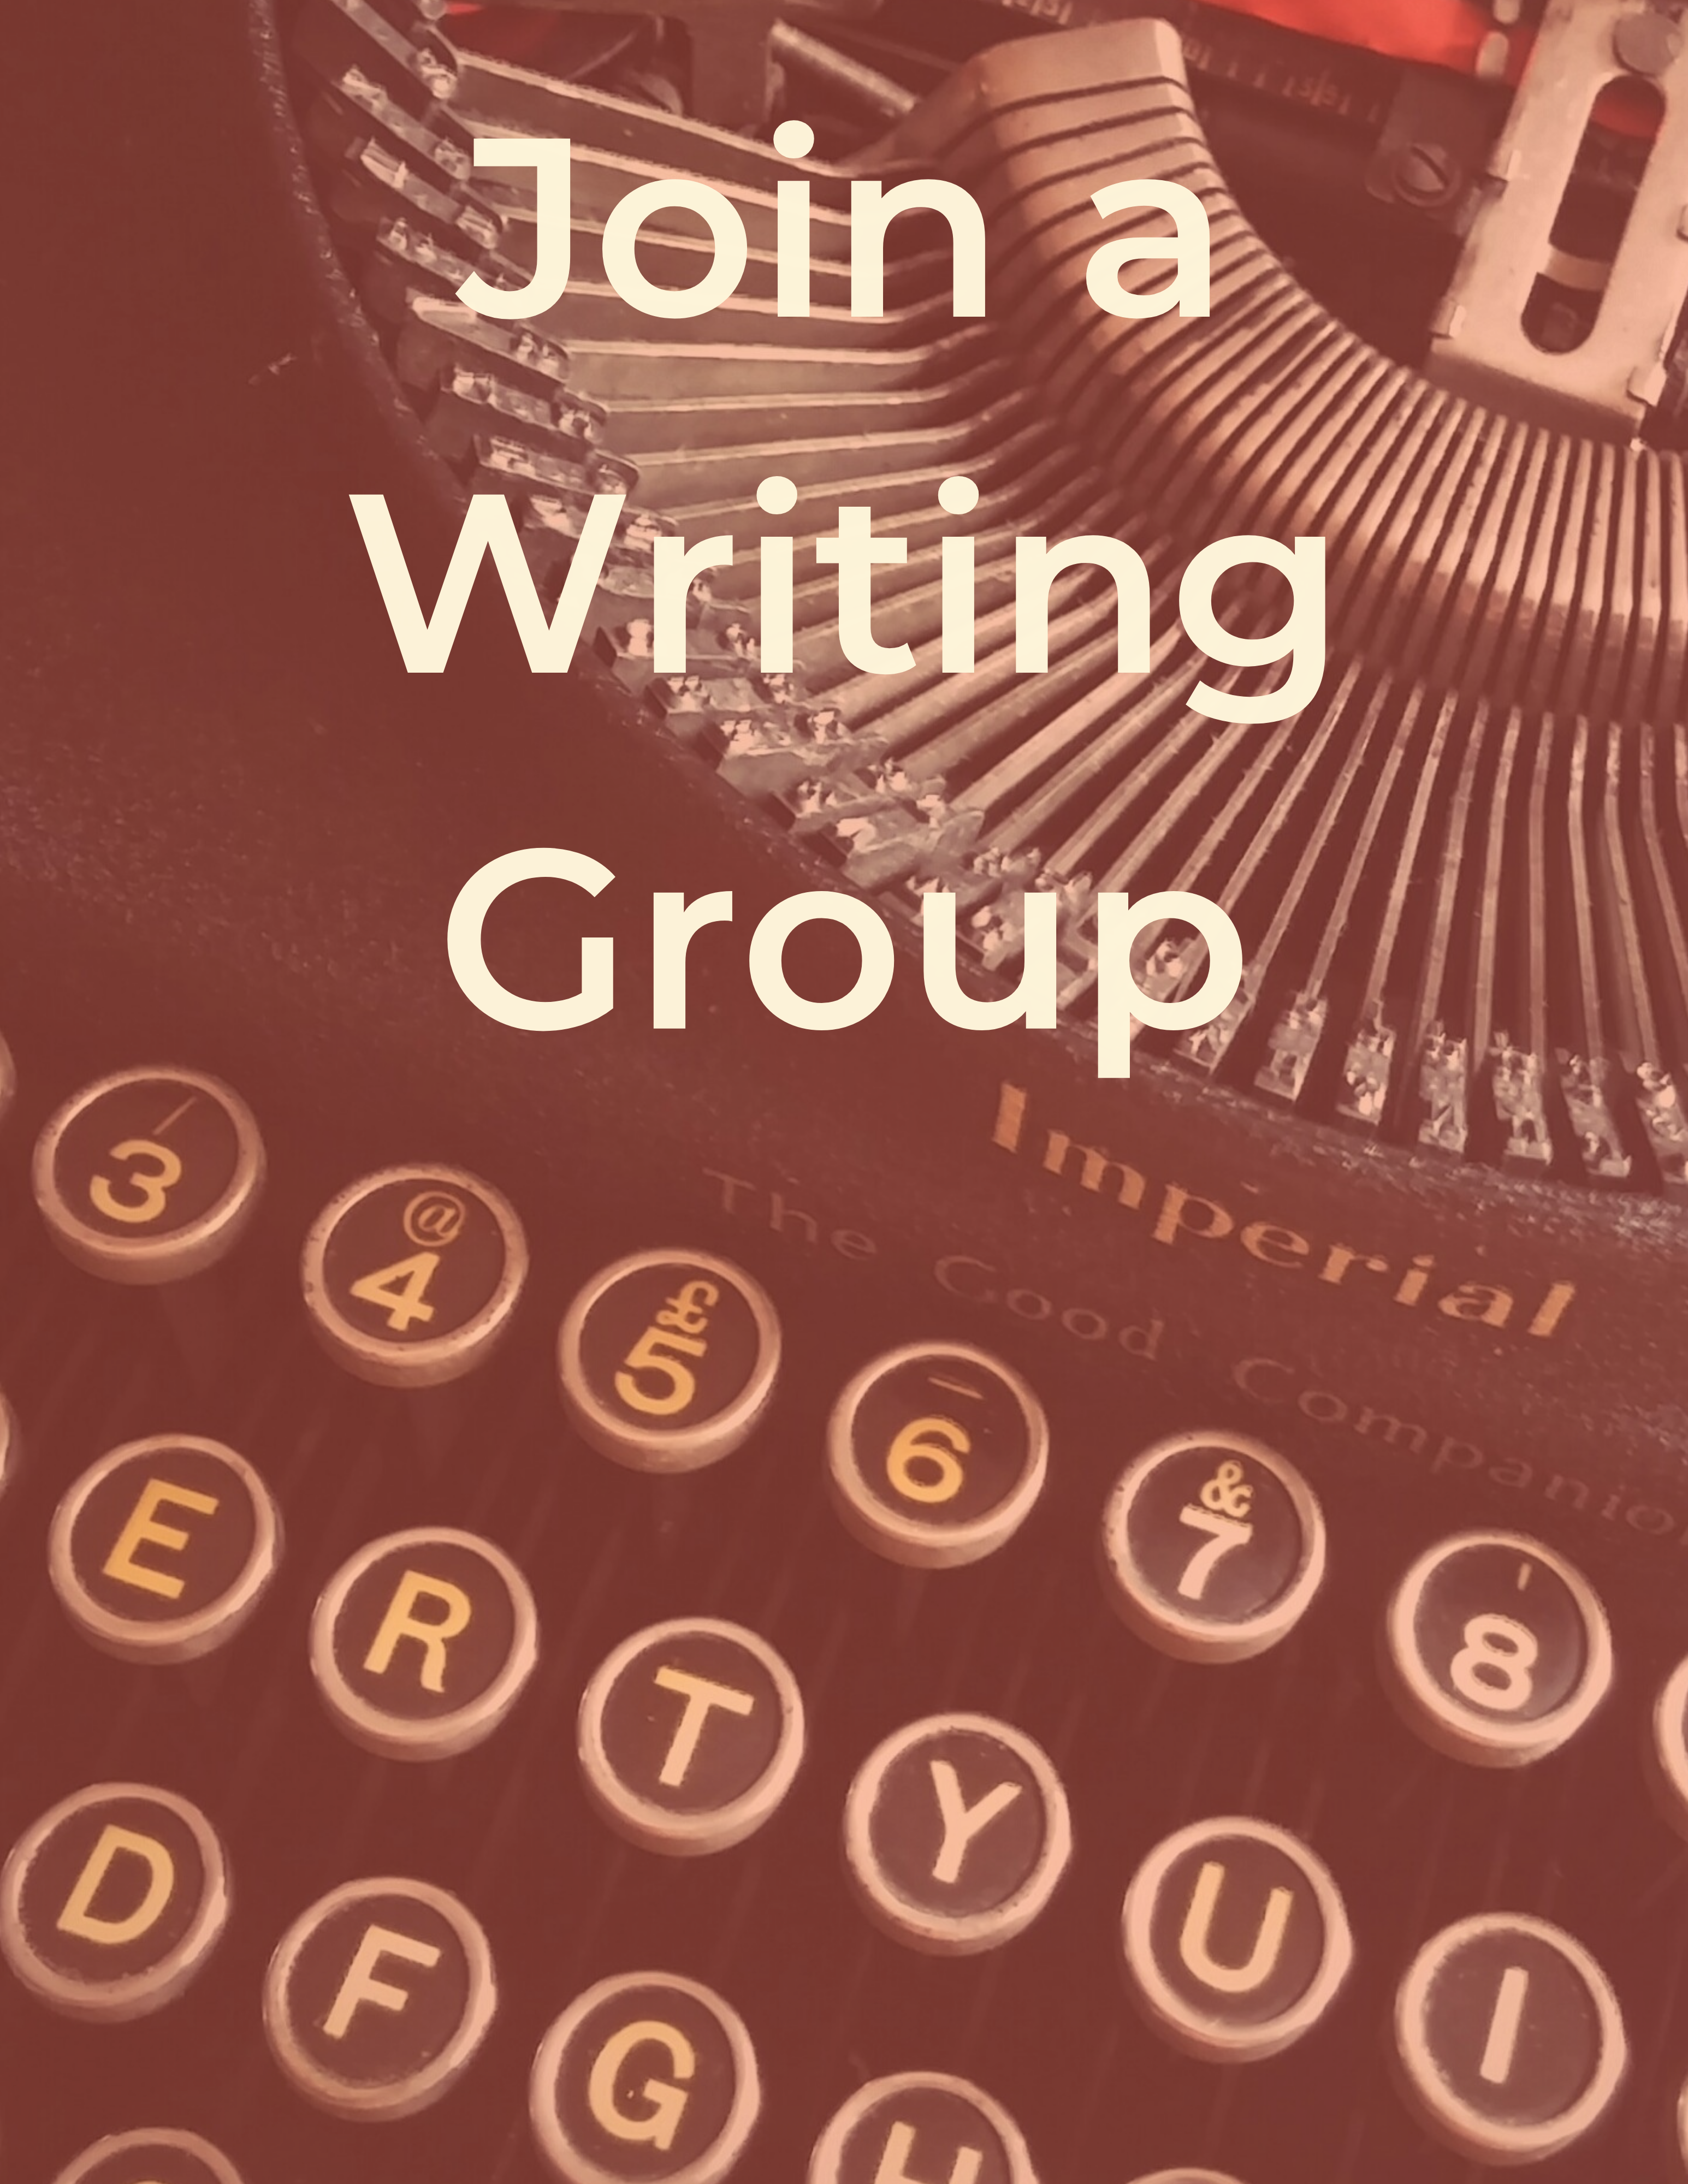 Join a writing group typewriter keys and typewriter in background